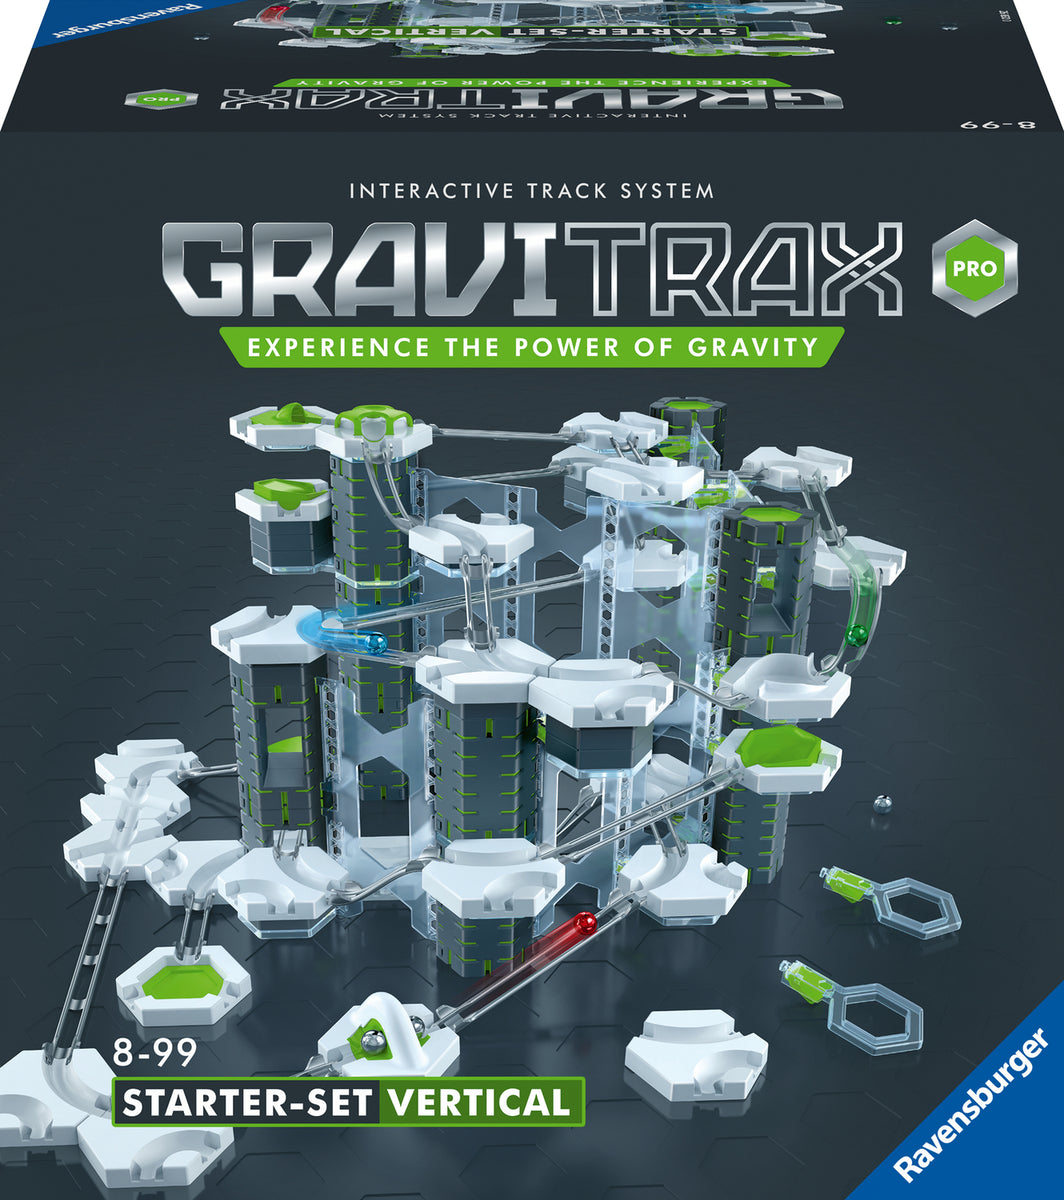 Ravensburger Gravitrax 8-99 Starter Set Marble Run Stem Toy Interactive  Track